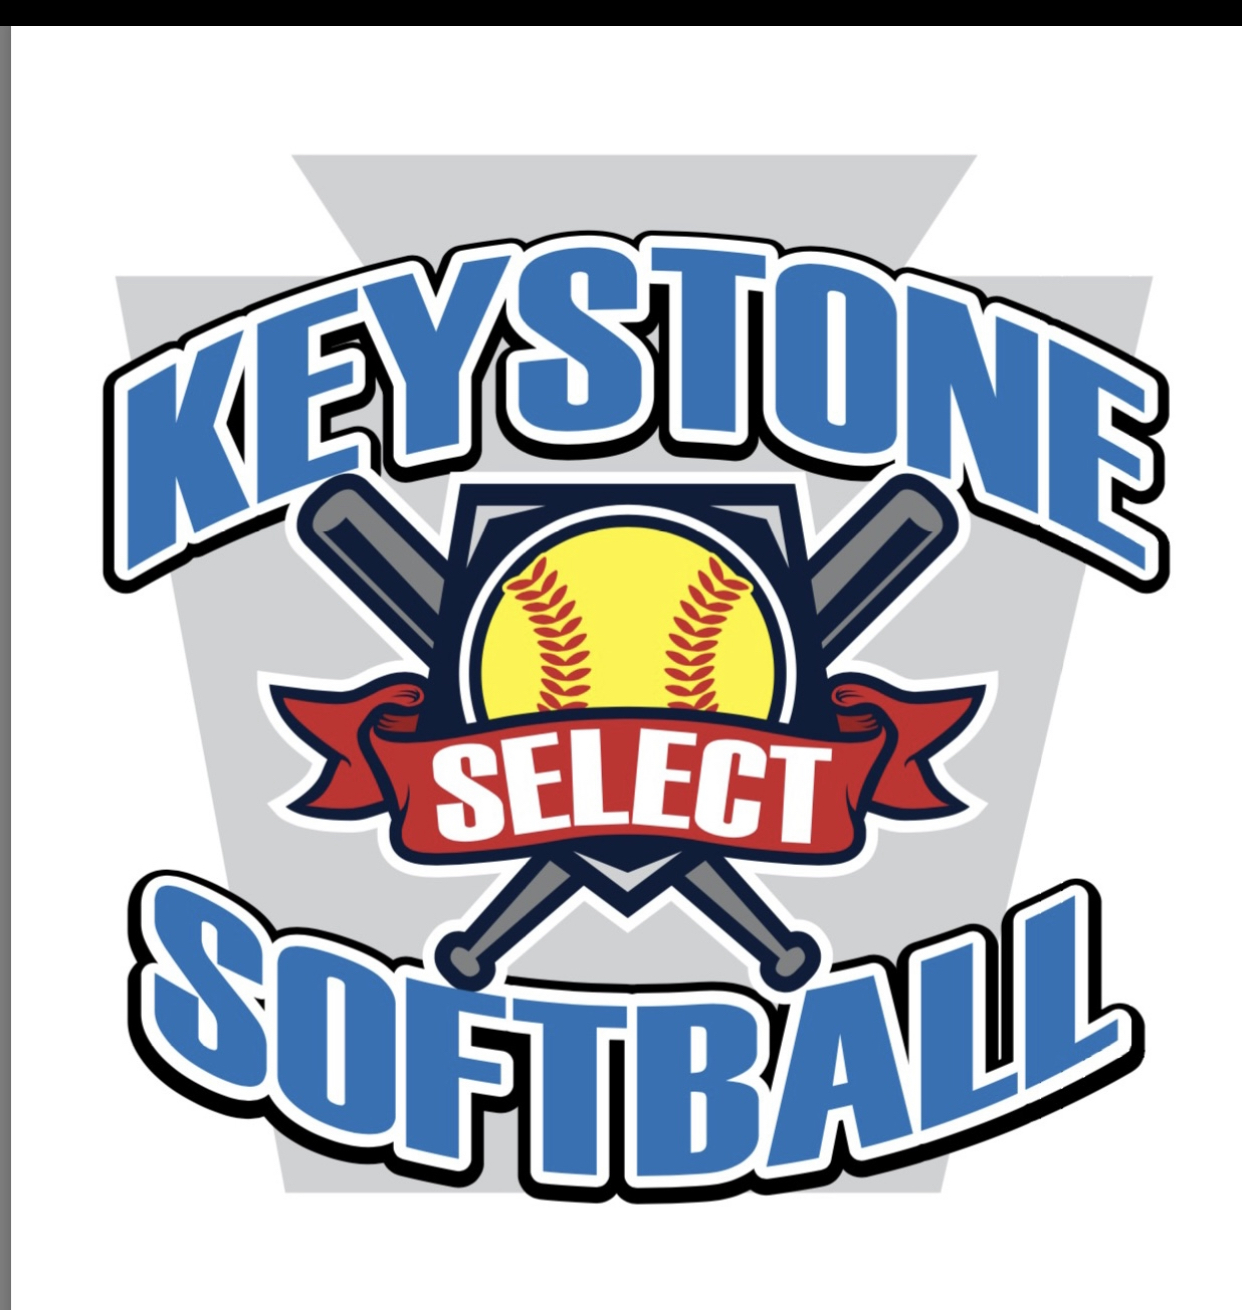 Keystone Select Softball Camp Victory Tournament Williamsport Area Logo